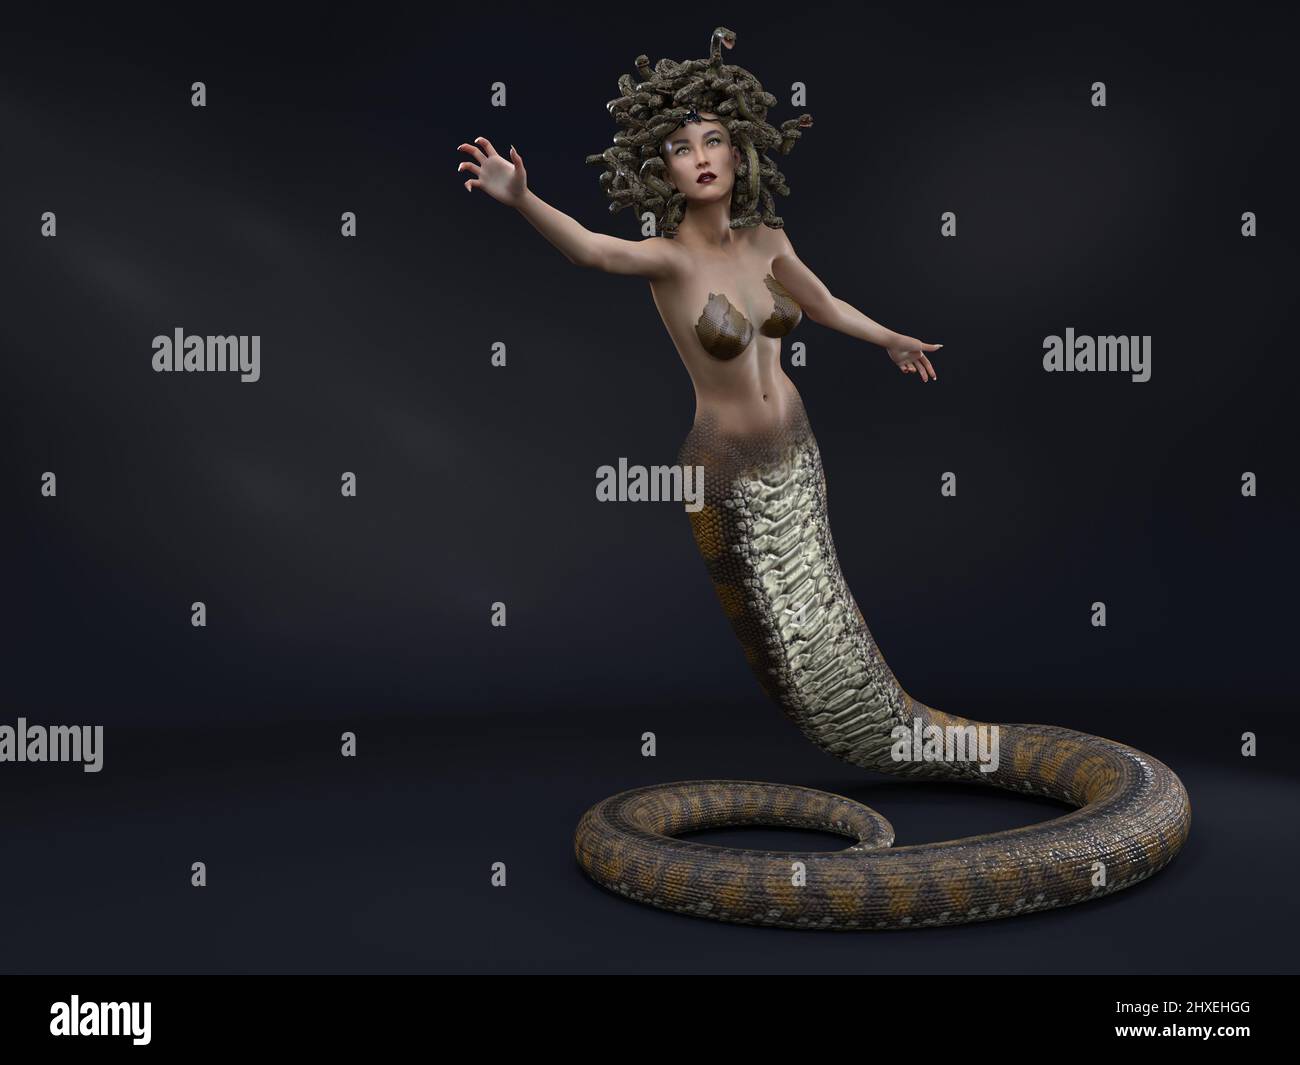 https://c8.alamy.com/comp/2HXEHGG/3d-render-medusa-gorgon-character-from-greek-mythology-a-female-character-from-greek-mythology-that-has-a-snake-body-for-her-lower-body-2HXEHGG.jpg